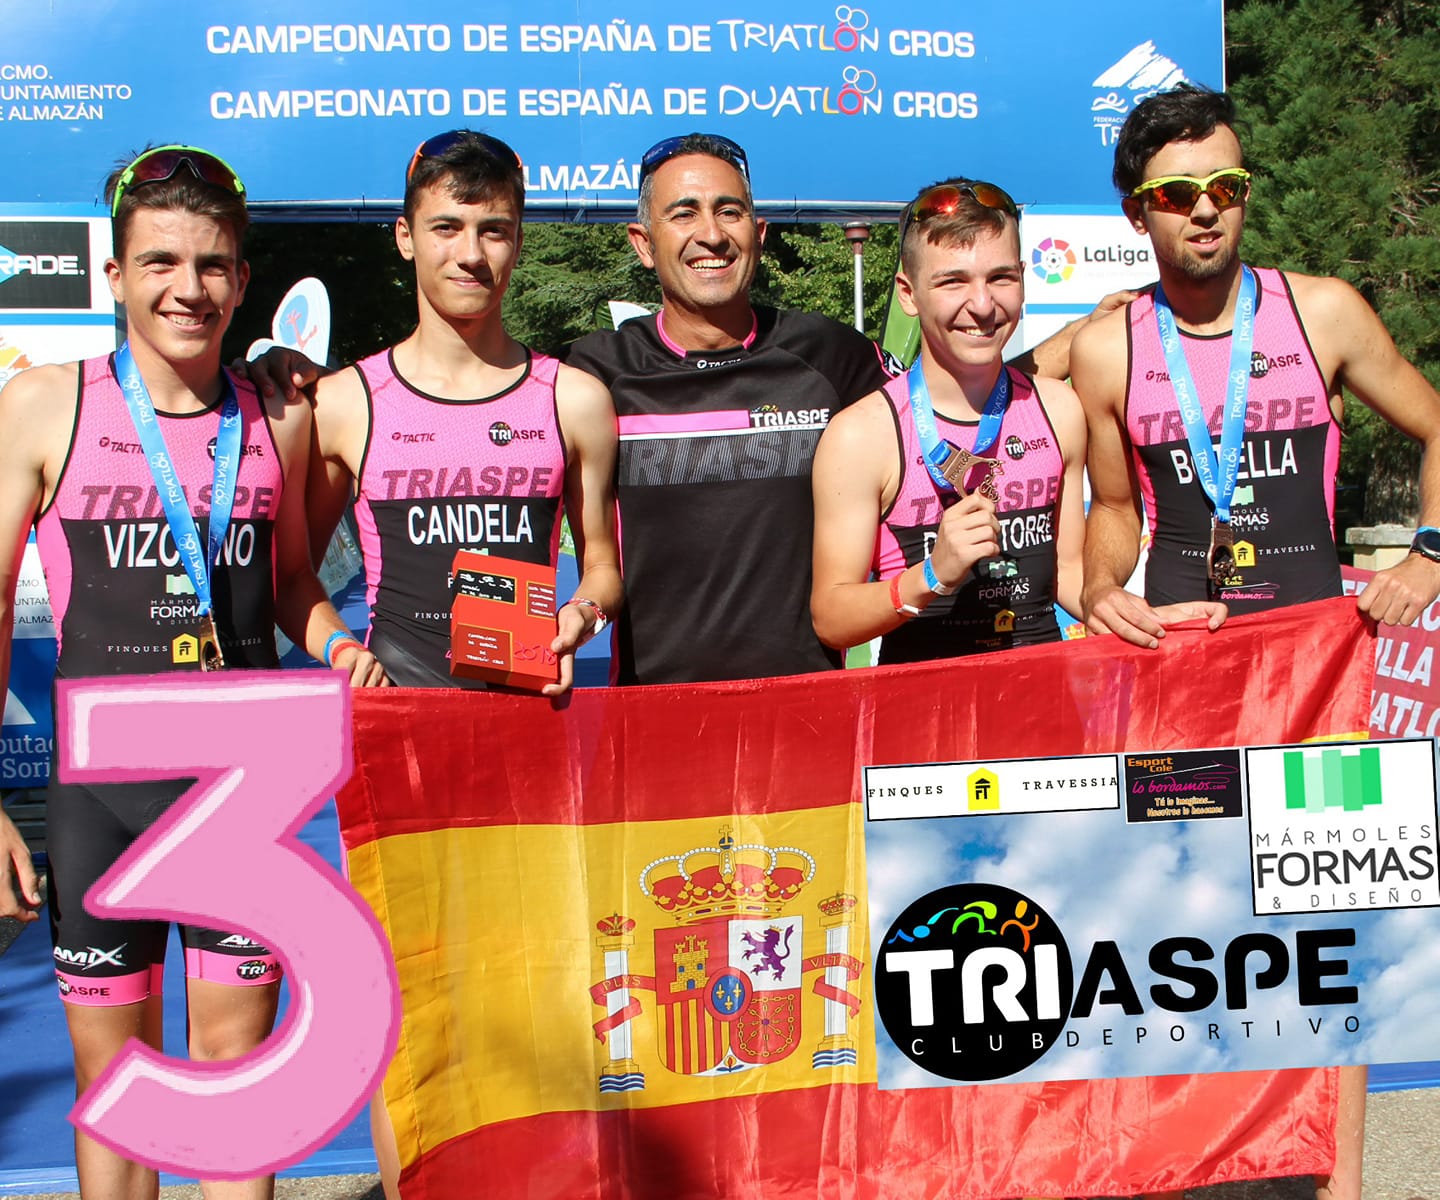 Club Deportivo Triaspe - Aspe (Alicante)